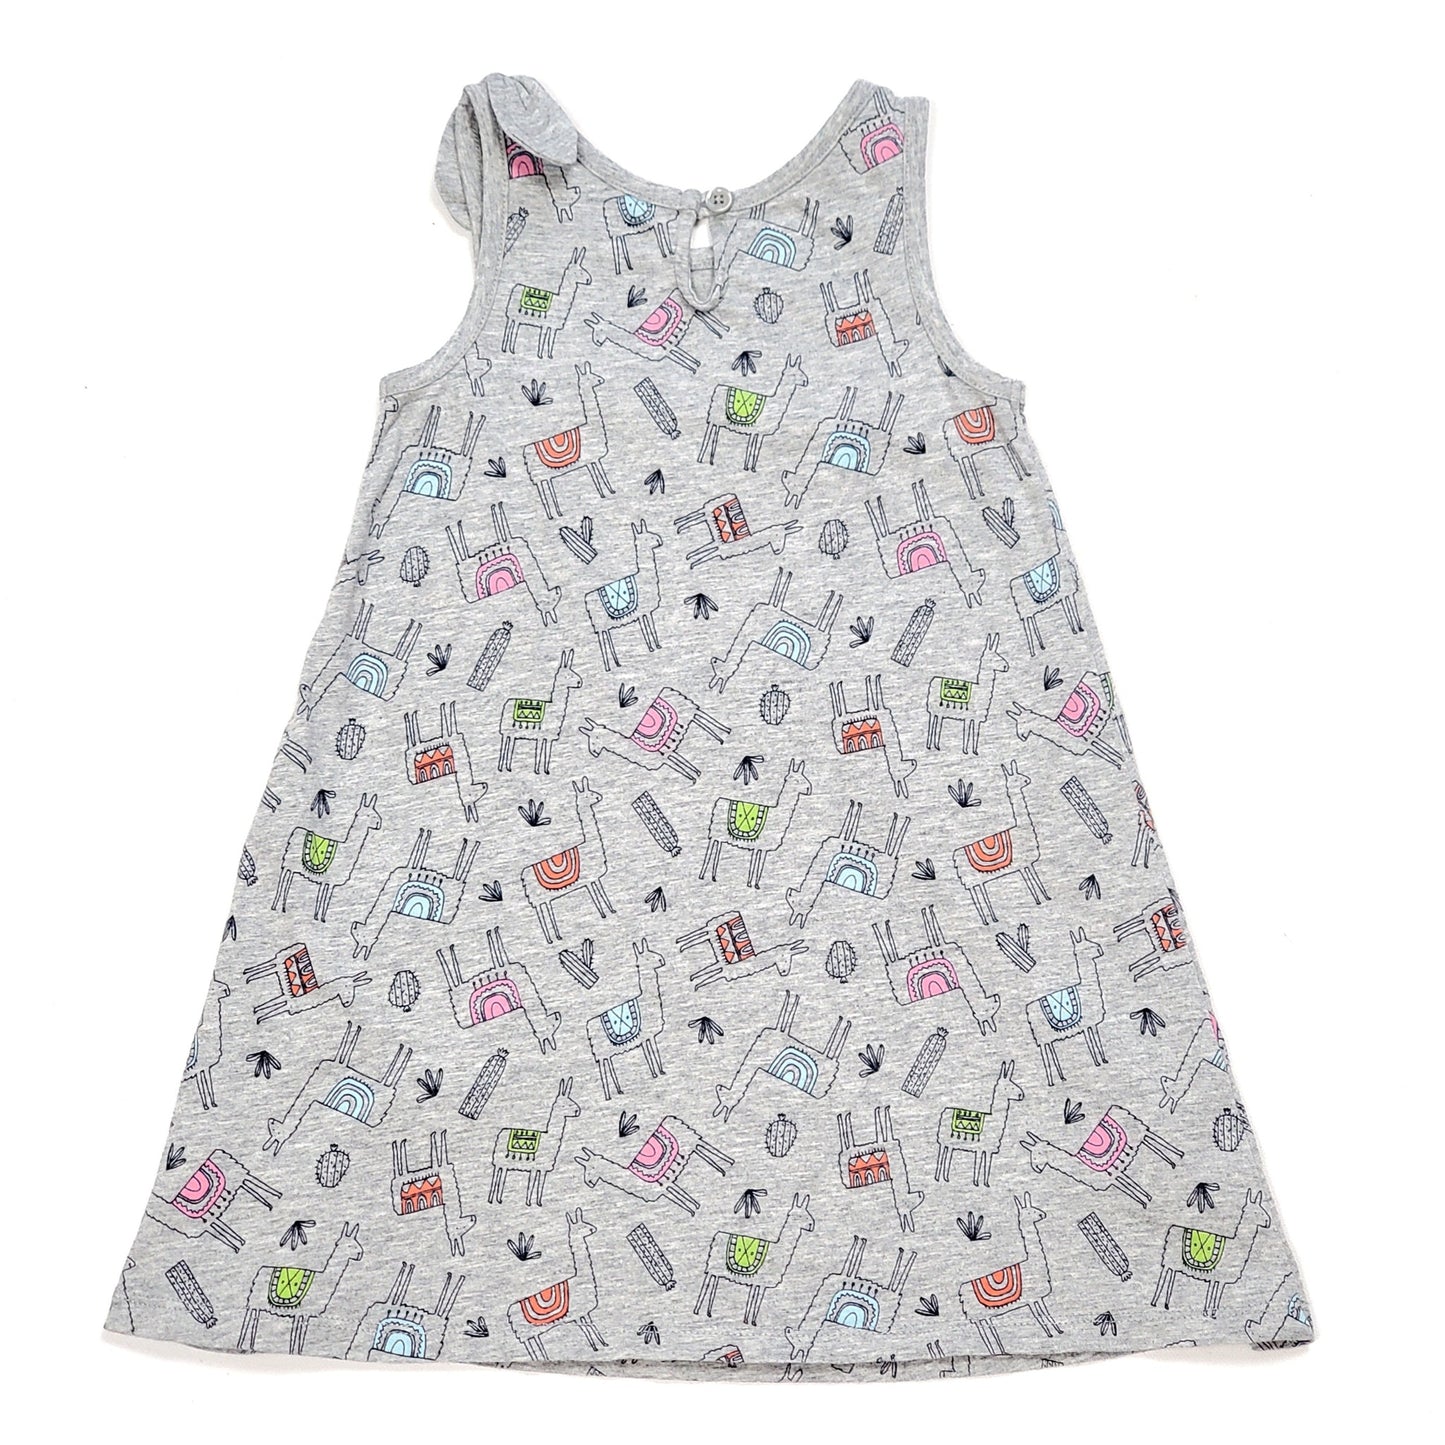 Baby Gap Llama Print Girls Dress 3T Used, back